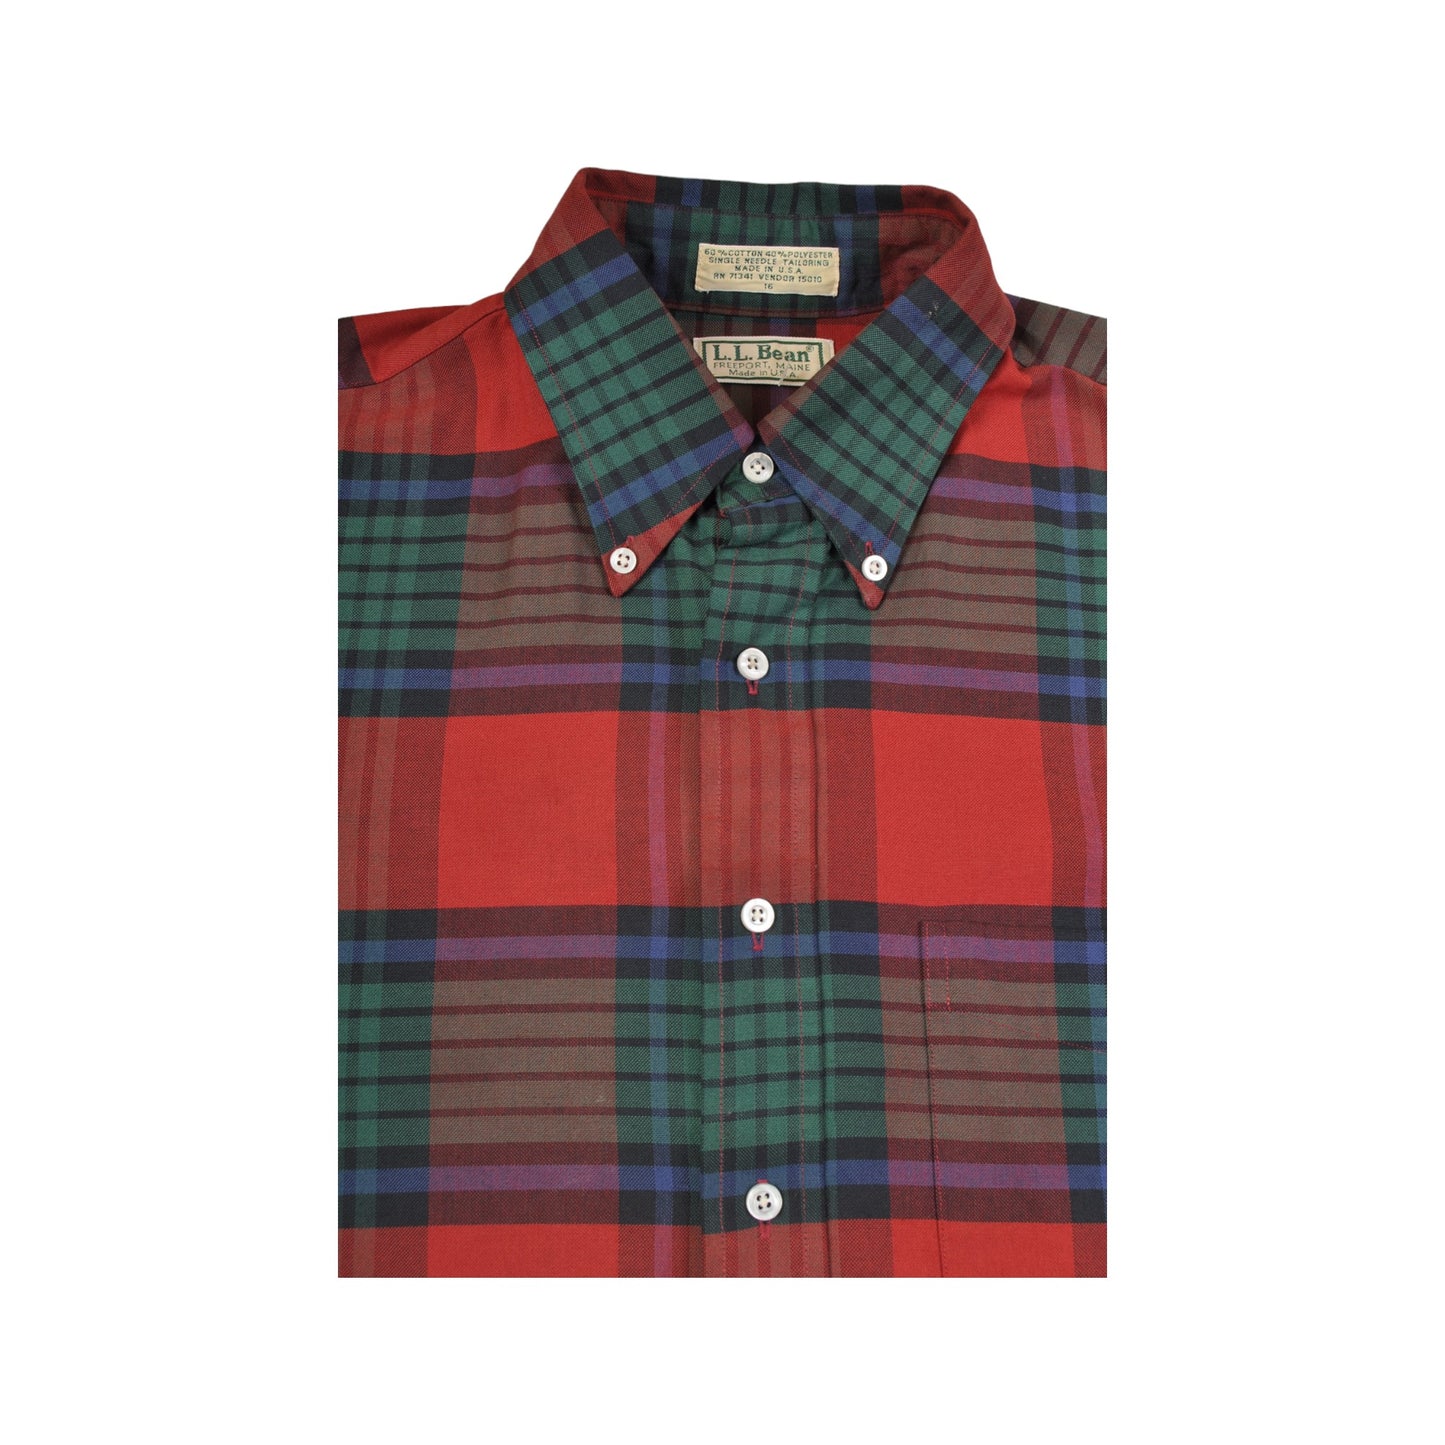 Vintage L.L Bean Shirt Short Sleeved Checked Pattern Red Medium